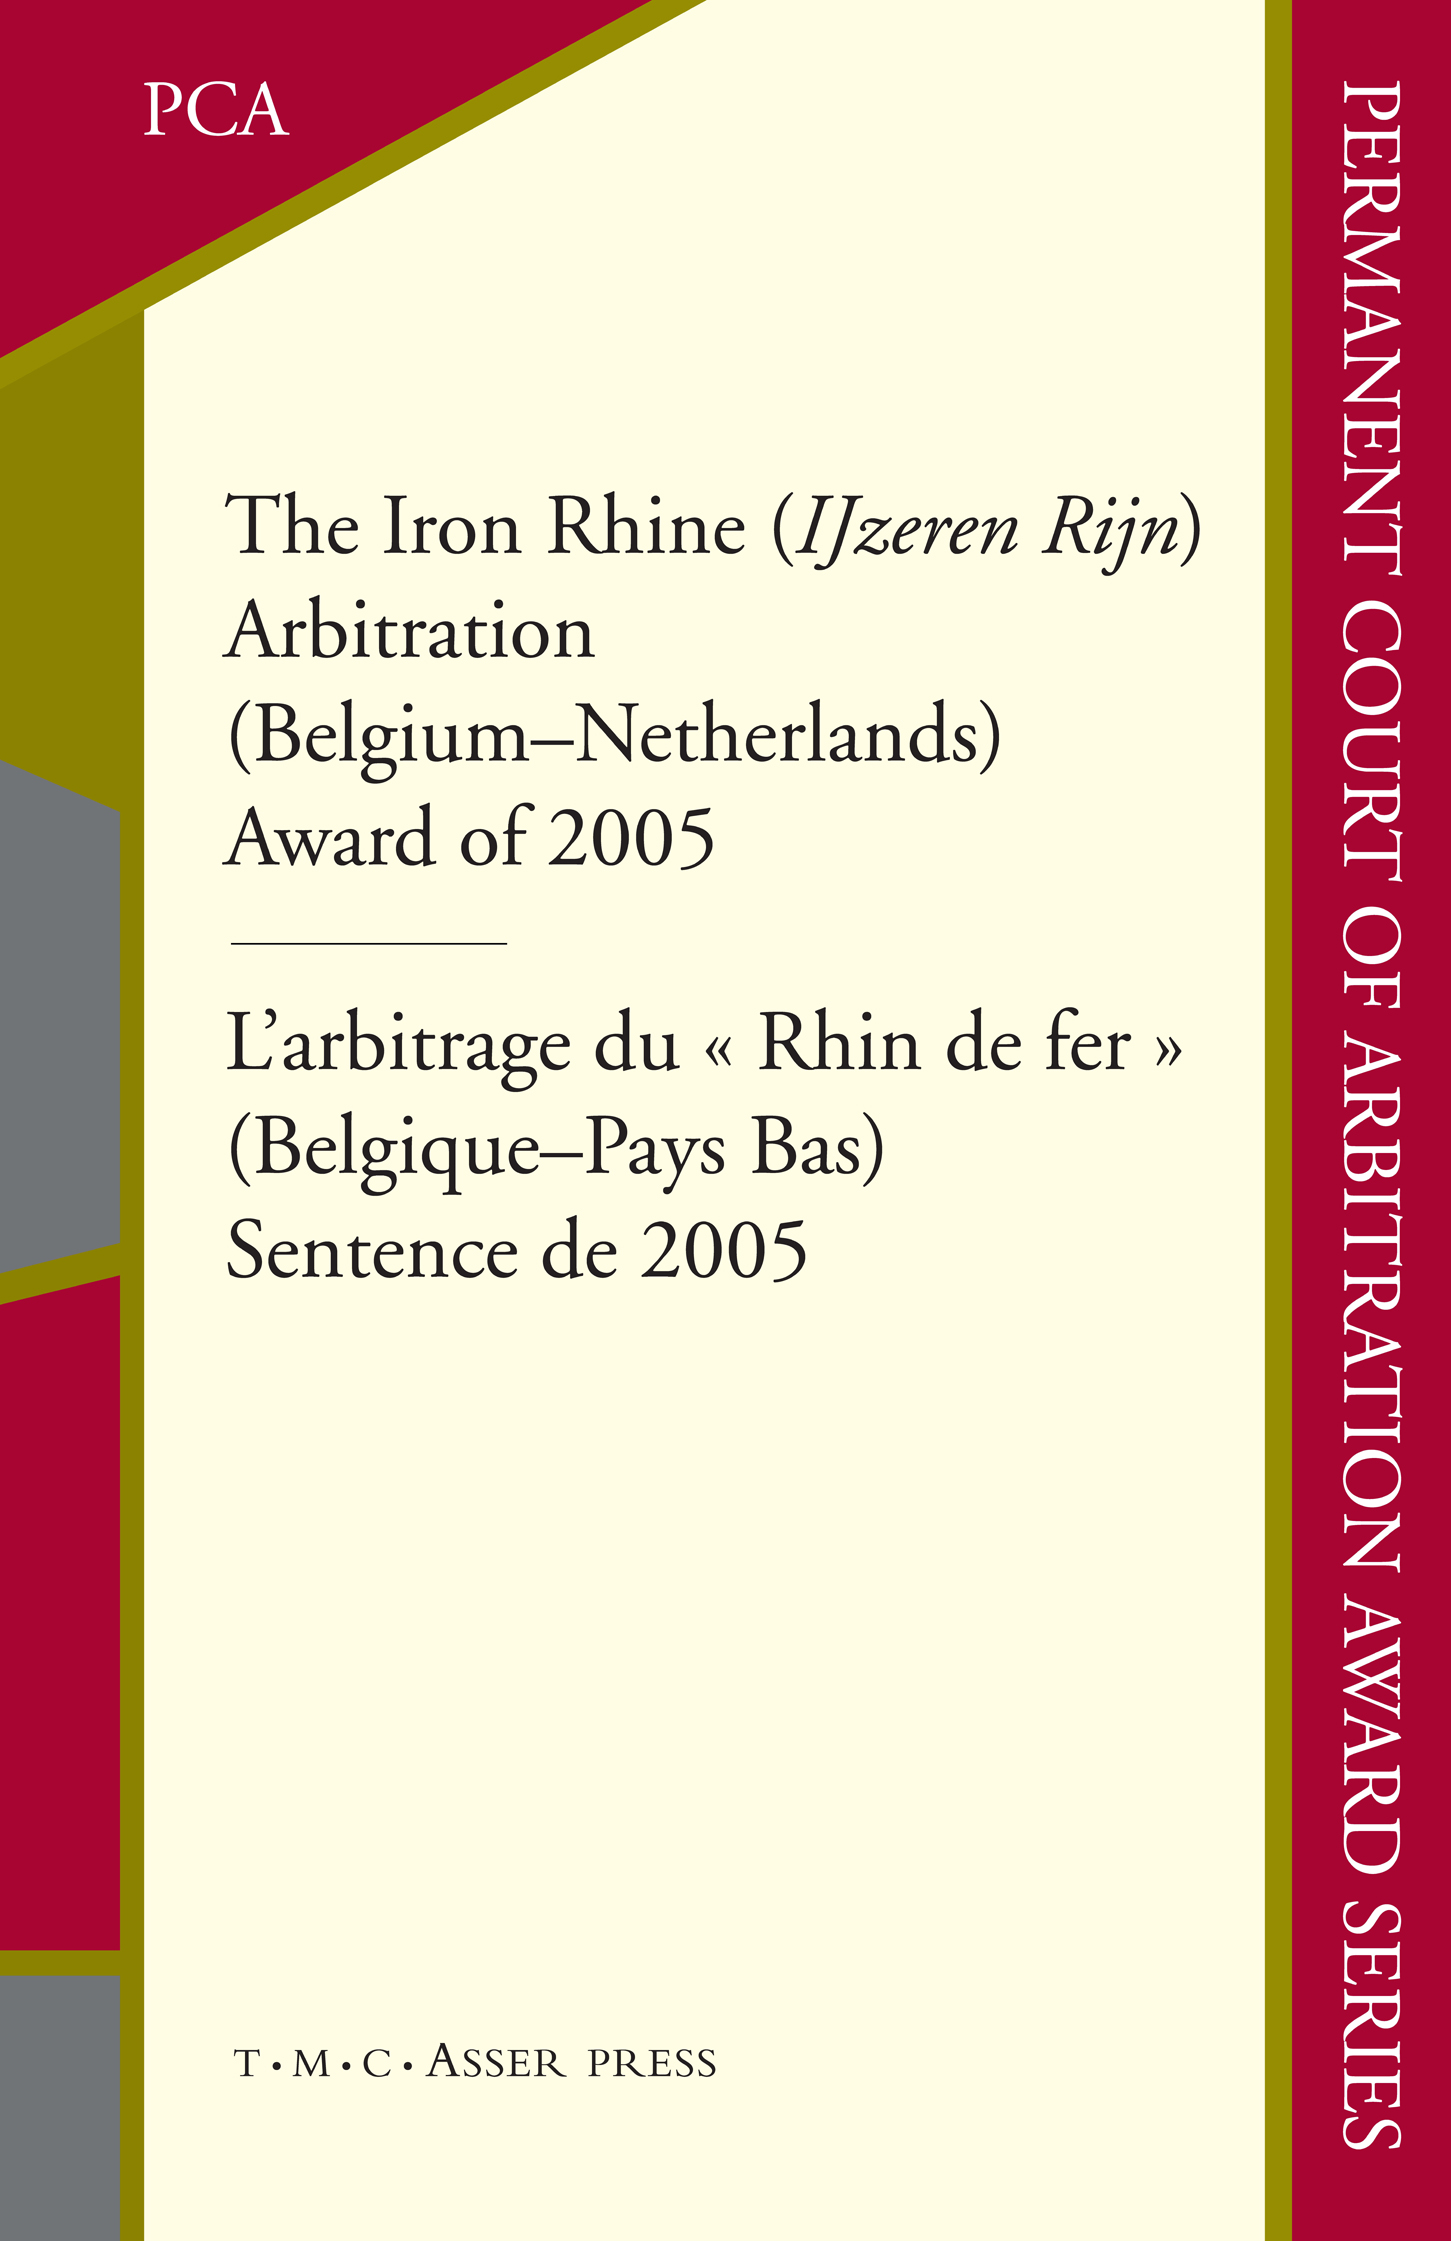 The Iron Rhine (IJzeren Rijn) Arbitration (Belgium-Netherlands) Award of 2005